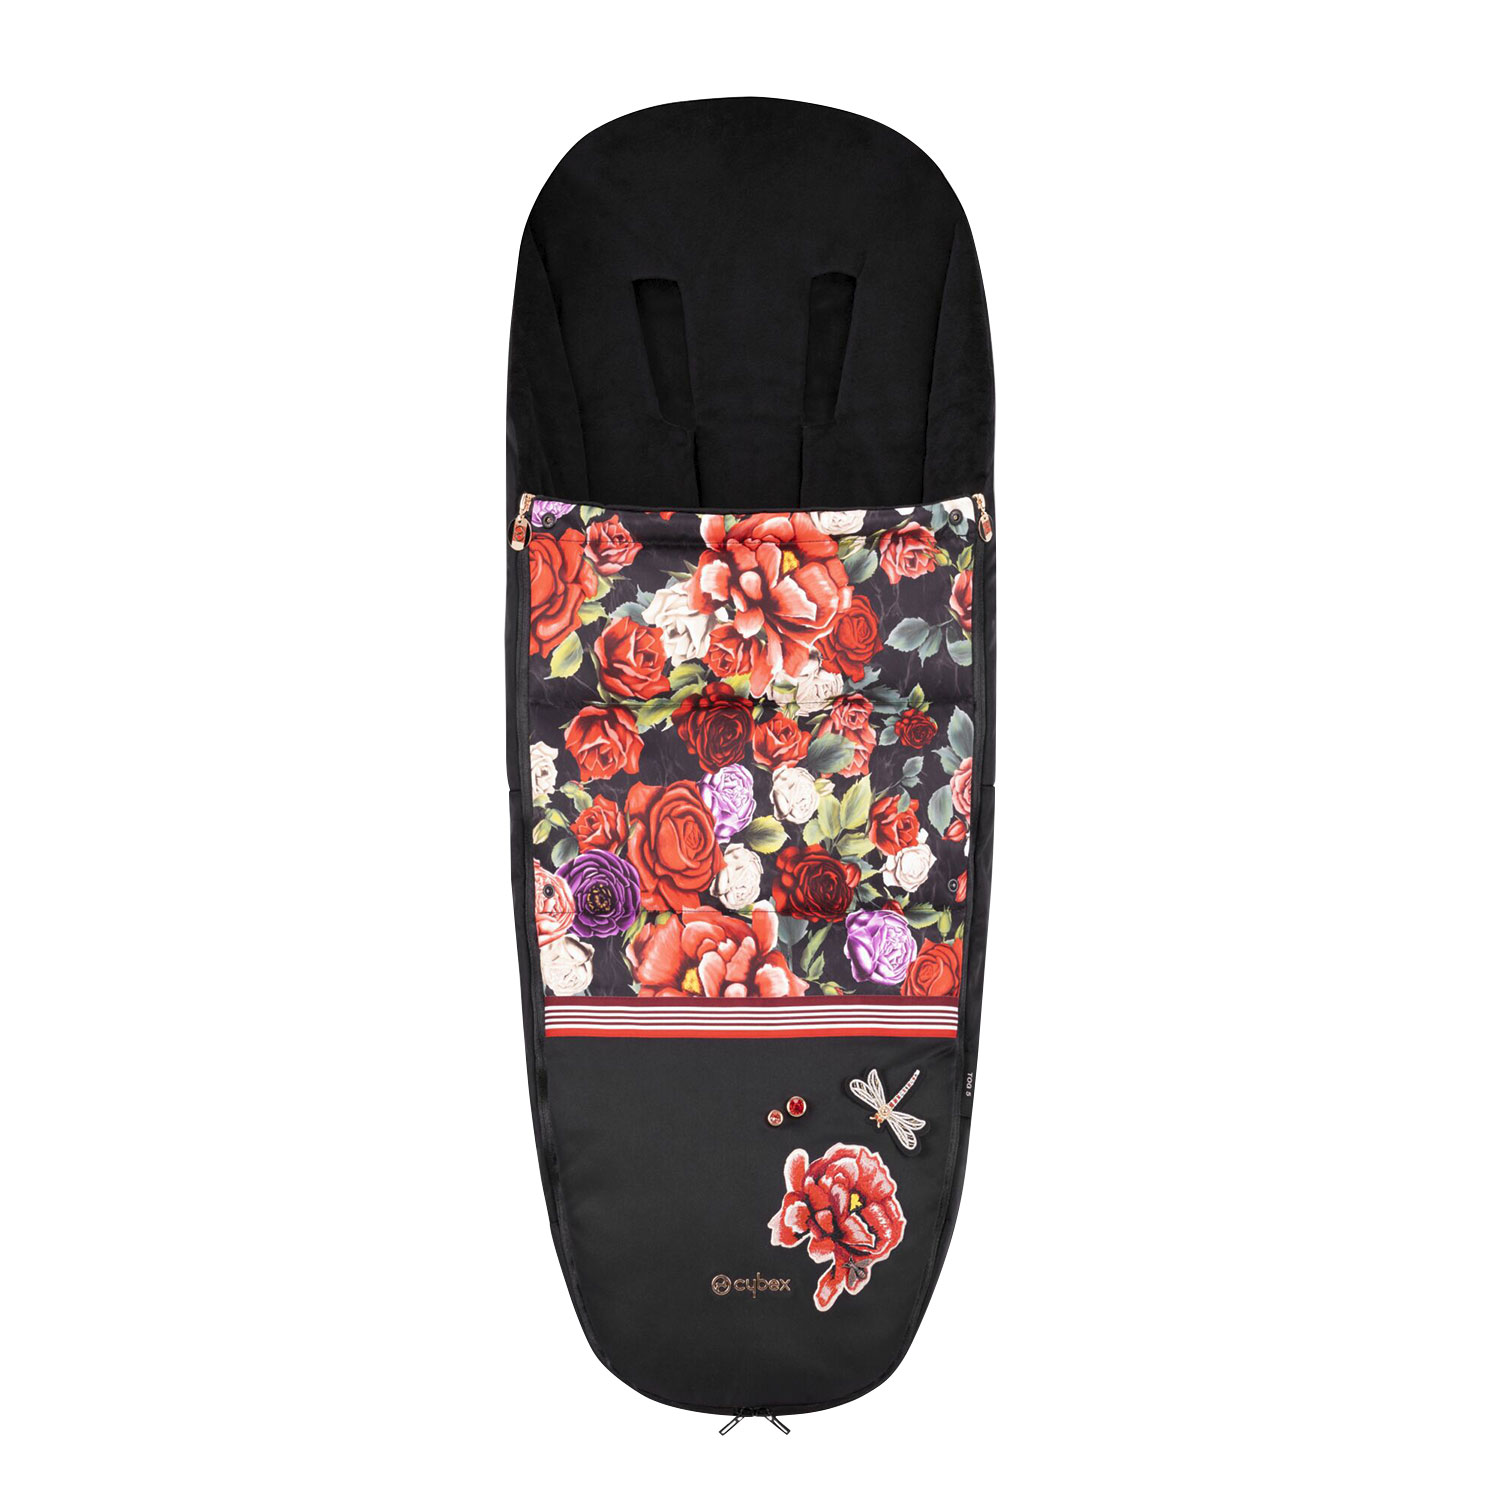 Накидка для ног для коляски  PRIAM Spring Blossom Dark CYBEX, цвет нет цвета - фото 1